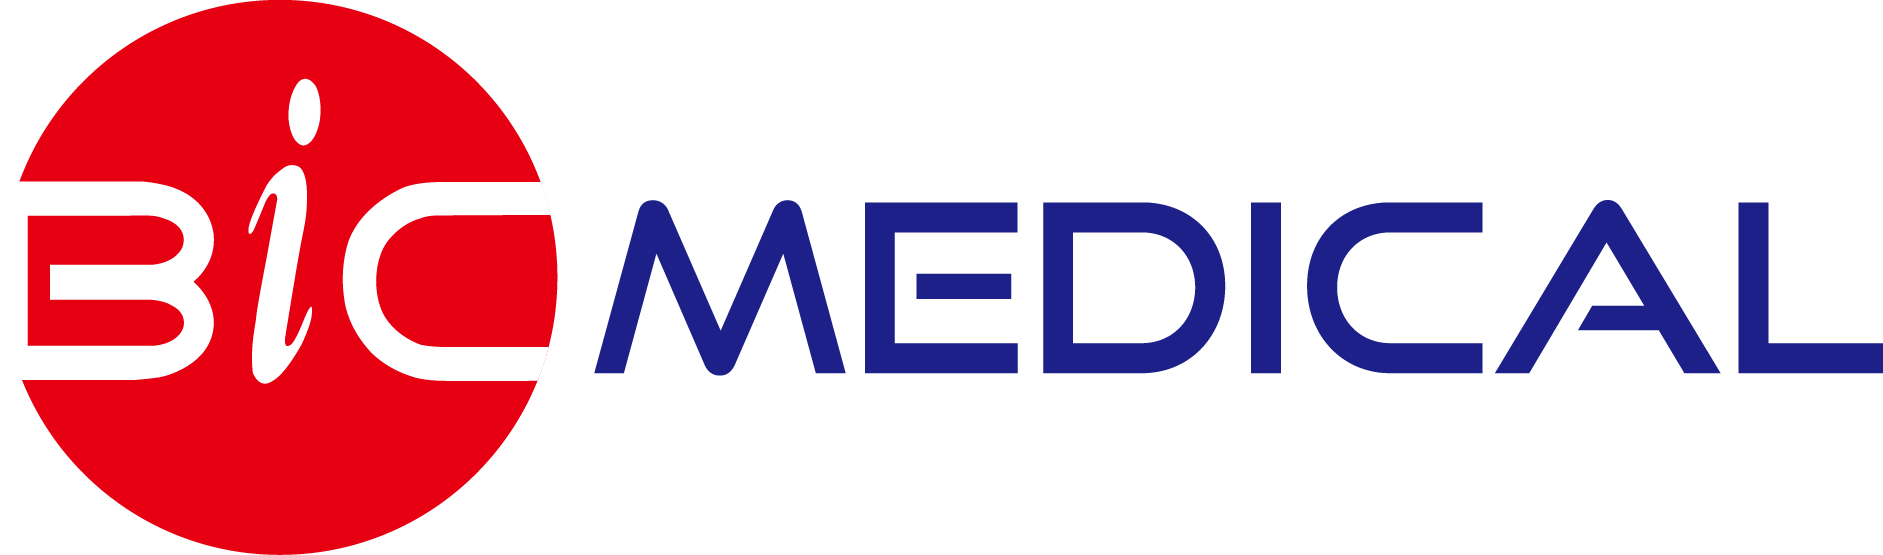 BICMedical logo1